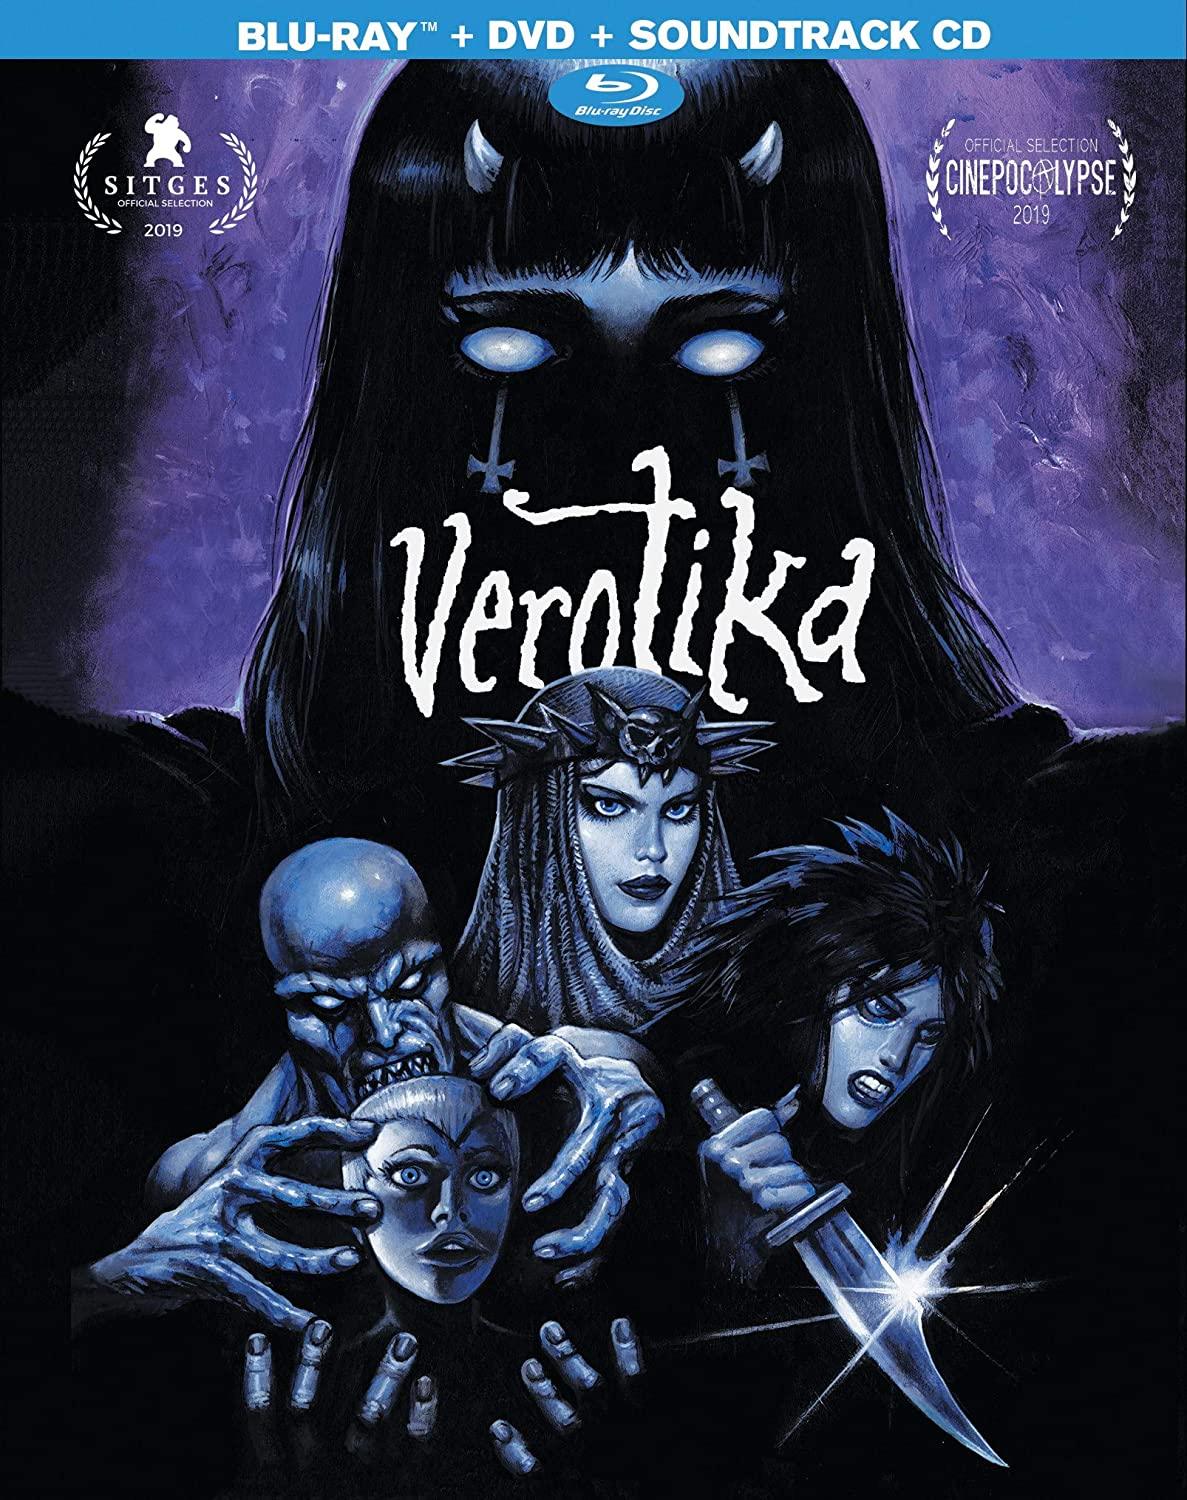 Verotika - DarksideRecords